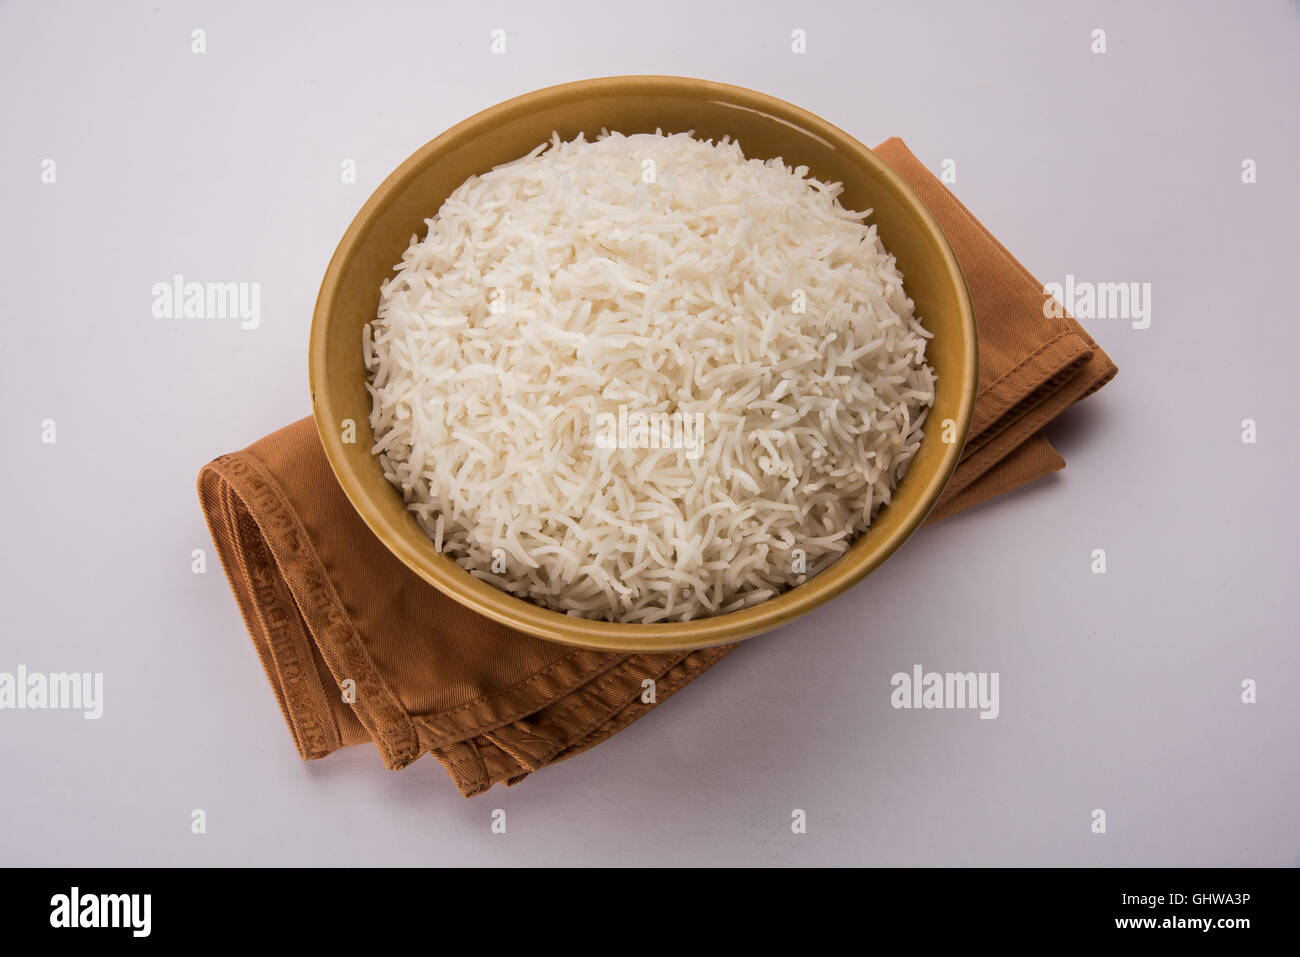 Basmati-Reis in einer Schüssel Messing, Basmati-Reis, Reis, gekocht weißen Basmati-Reis, gekocht gekocht Reis basmati Stockfoto